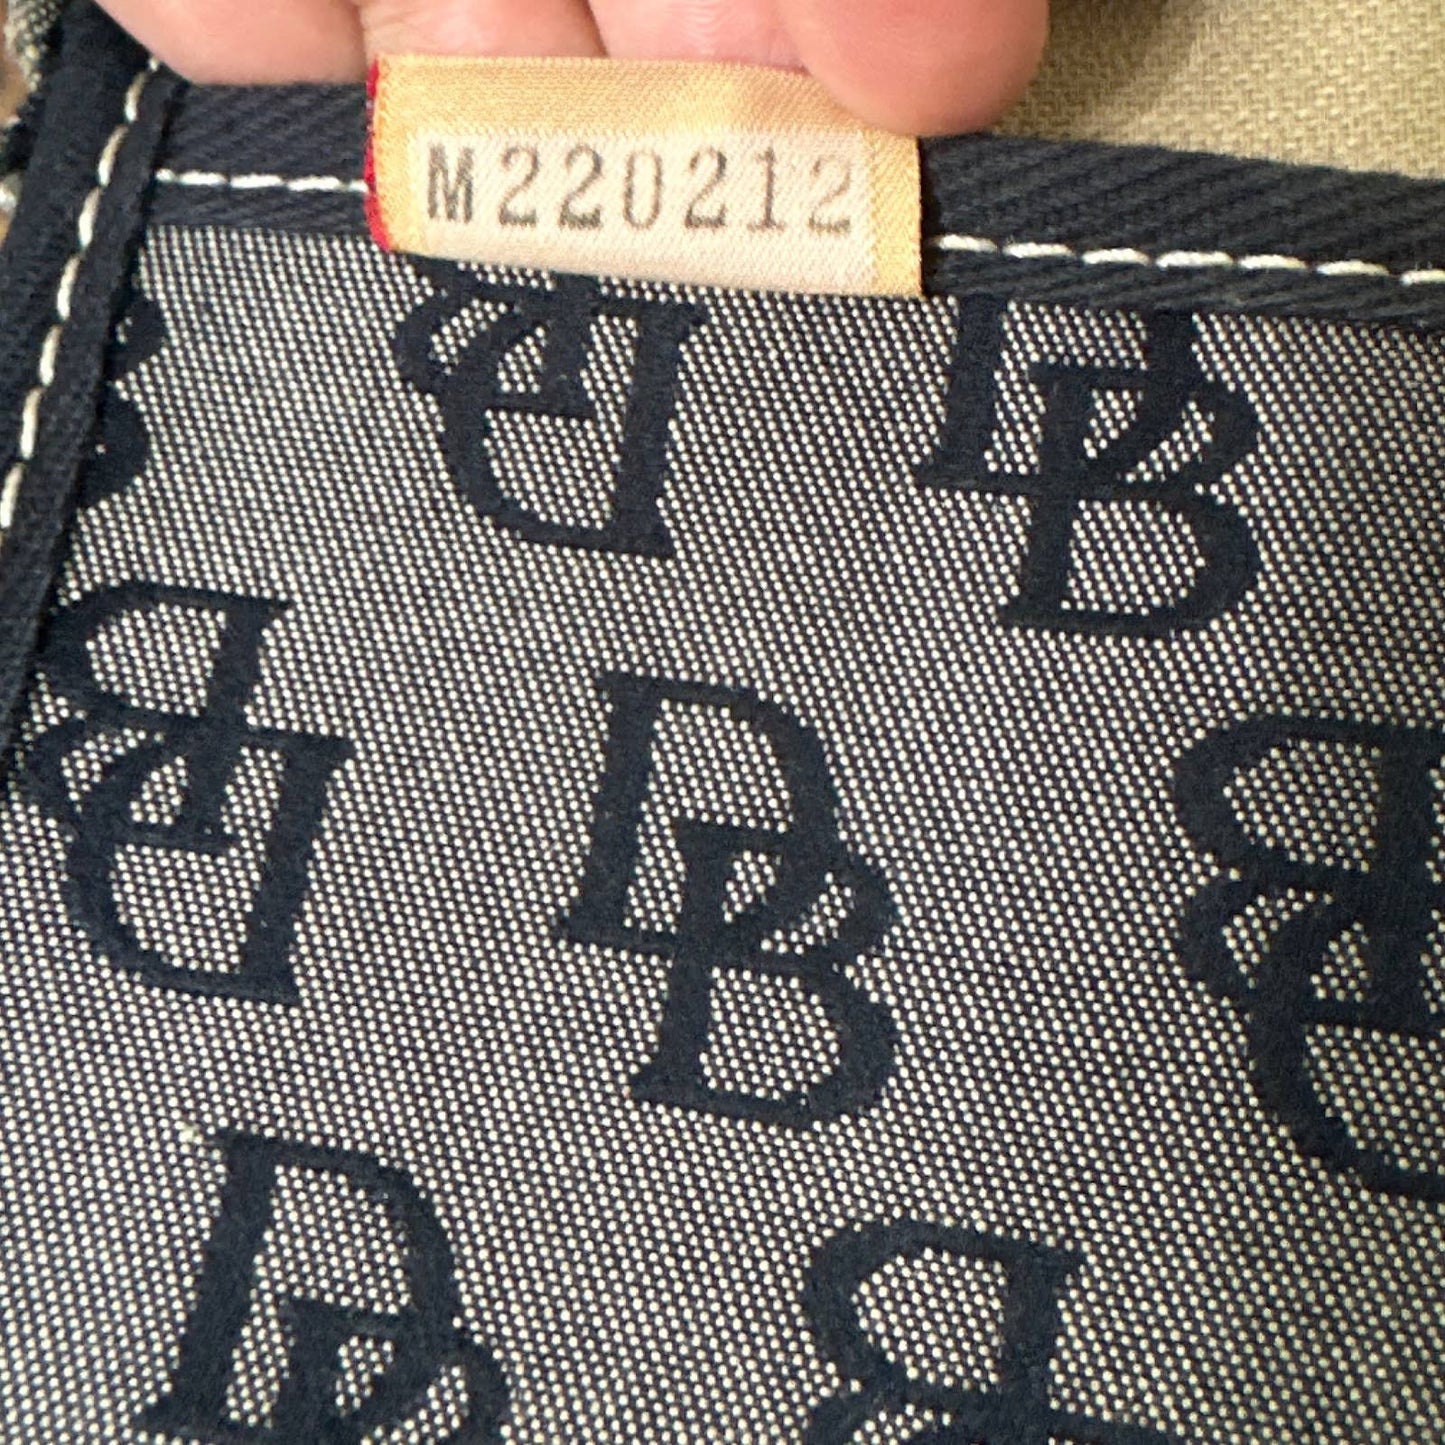 DOONEY & BOURKE Black and Gray Signature Canvas Shoulder bag